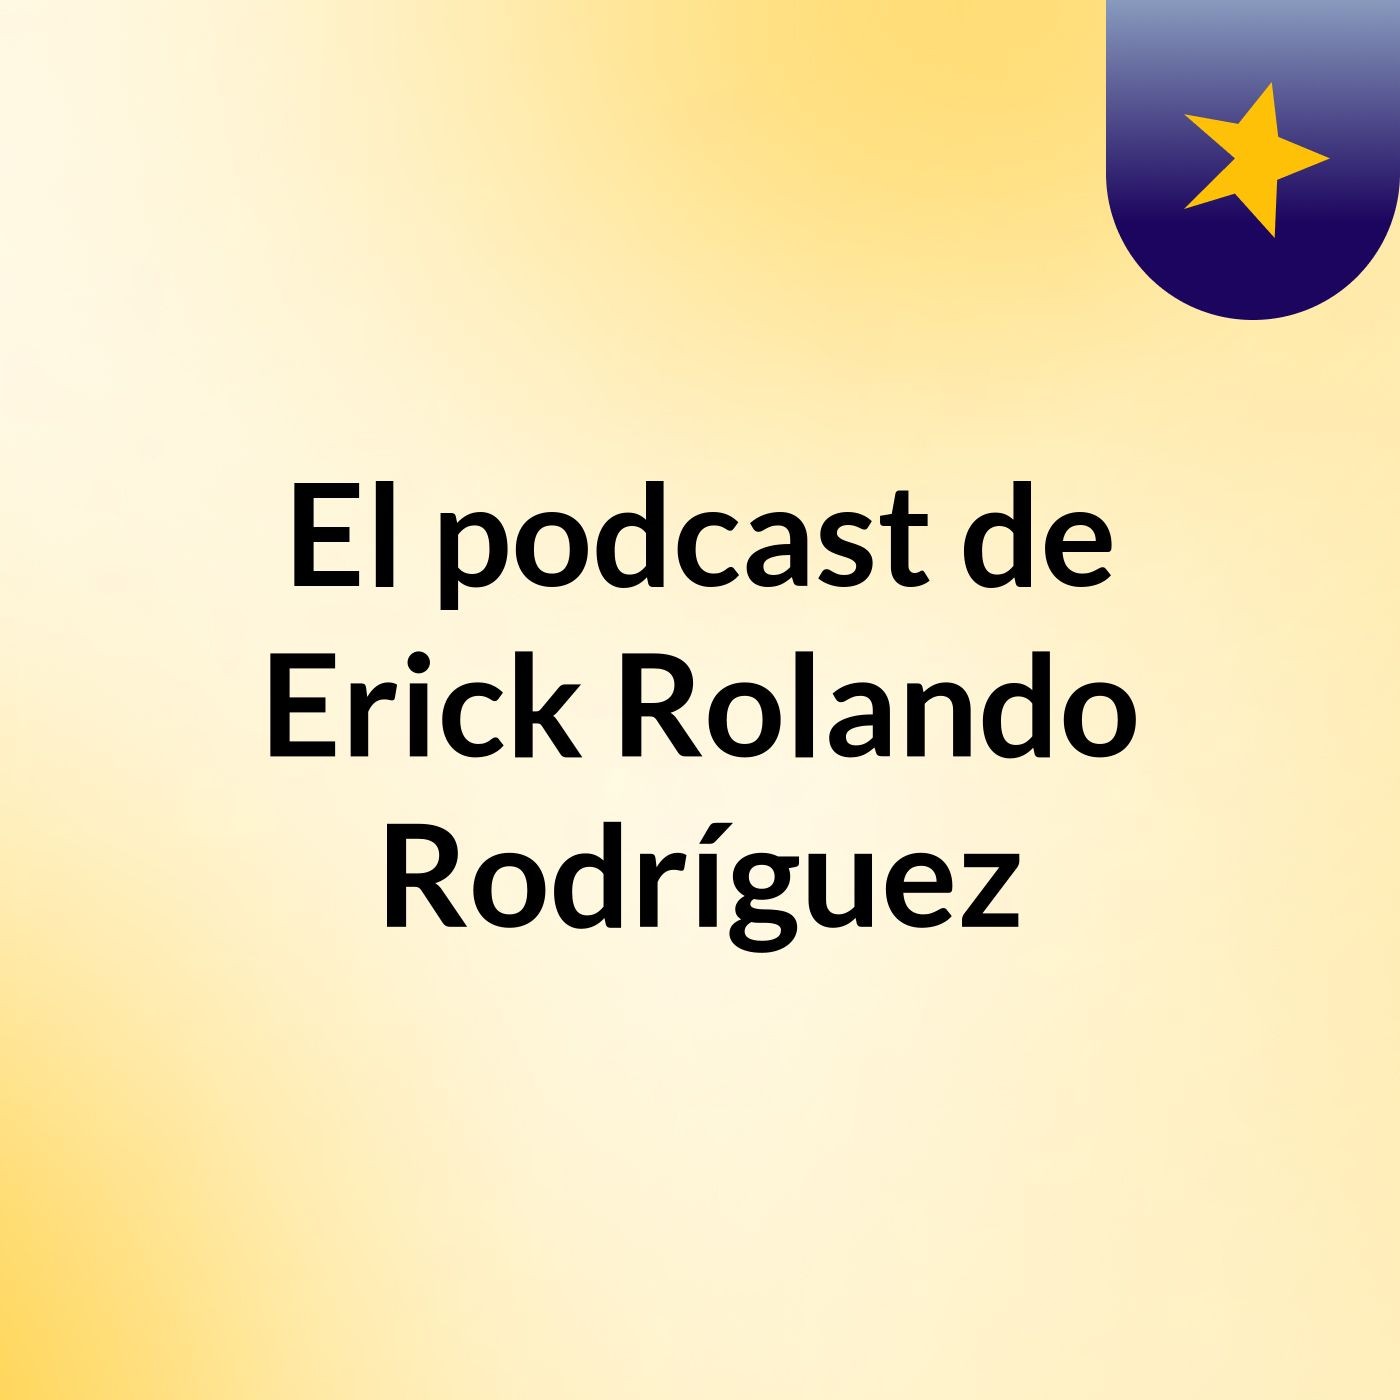 El podcast de Erick Rolando Rodríguez